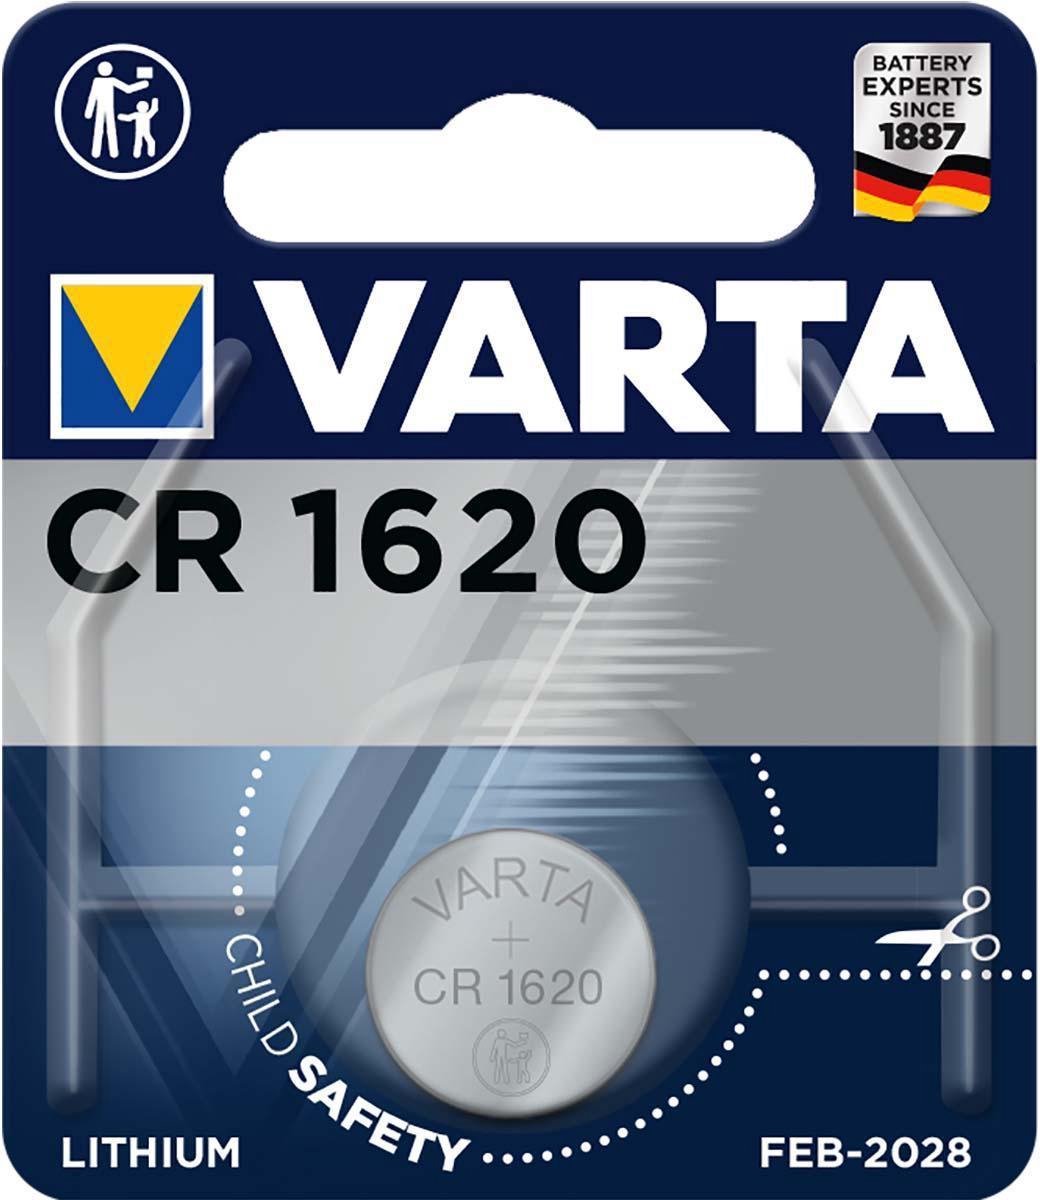 Varta Knoopcel Professional Lithium Cr1620: 3v